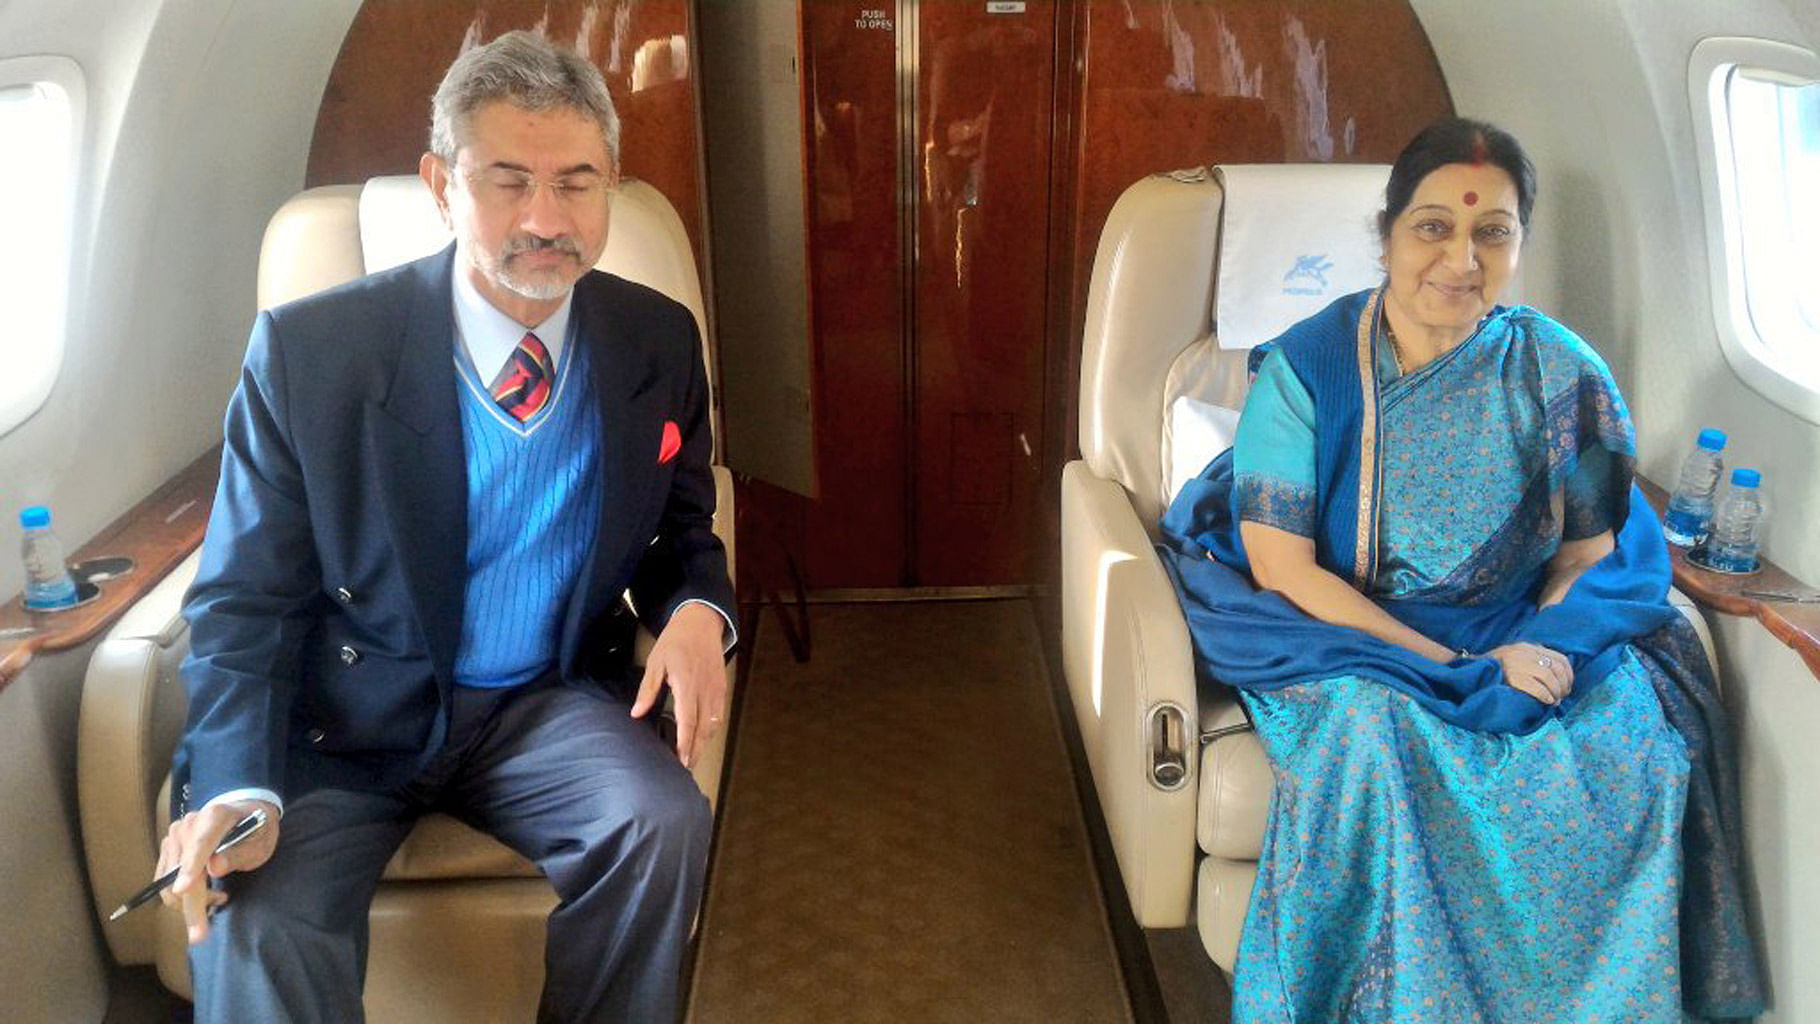 Sushma Swaraj on her way to Sri Lanka for a 2 day visit. (Photo Courtesy: Twitter/<a href="https://twitter.com/MEAIndia/status/695453158680584192">@MEAIndia</a>)